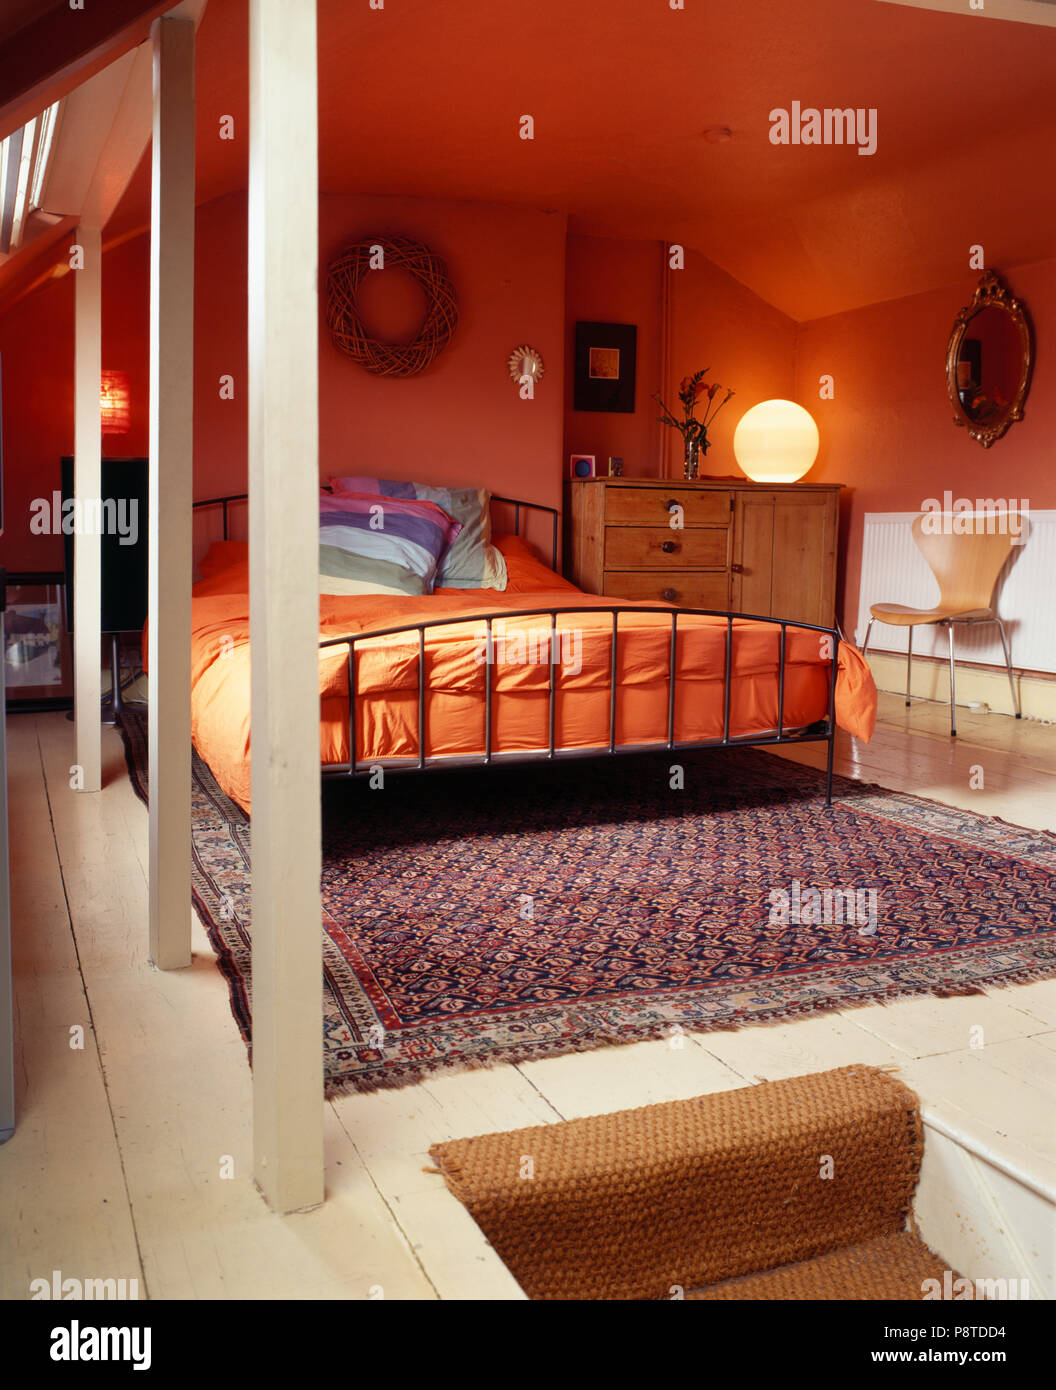 Orange duvet on metal bed in modern red loft conversion bedroom with antique oriental rug on floor Stock Photo